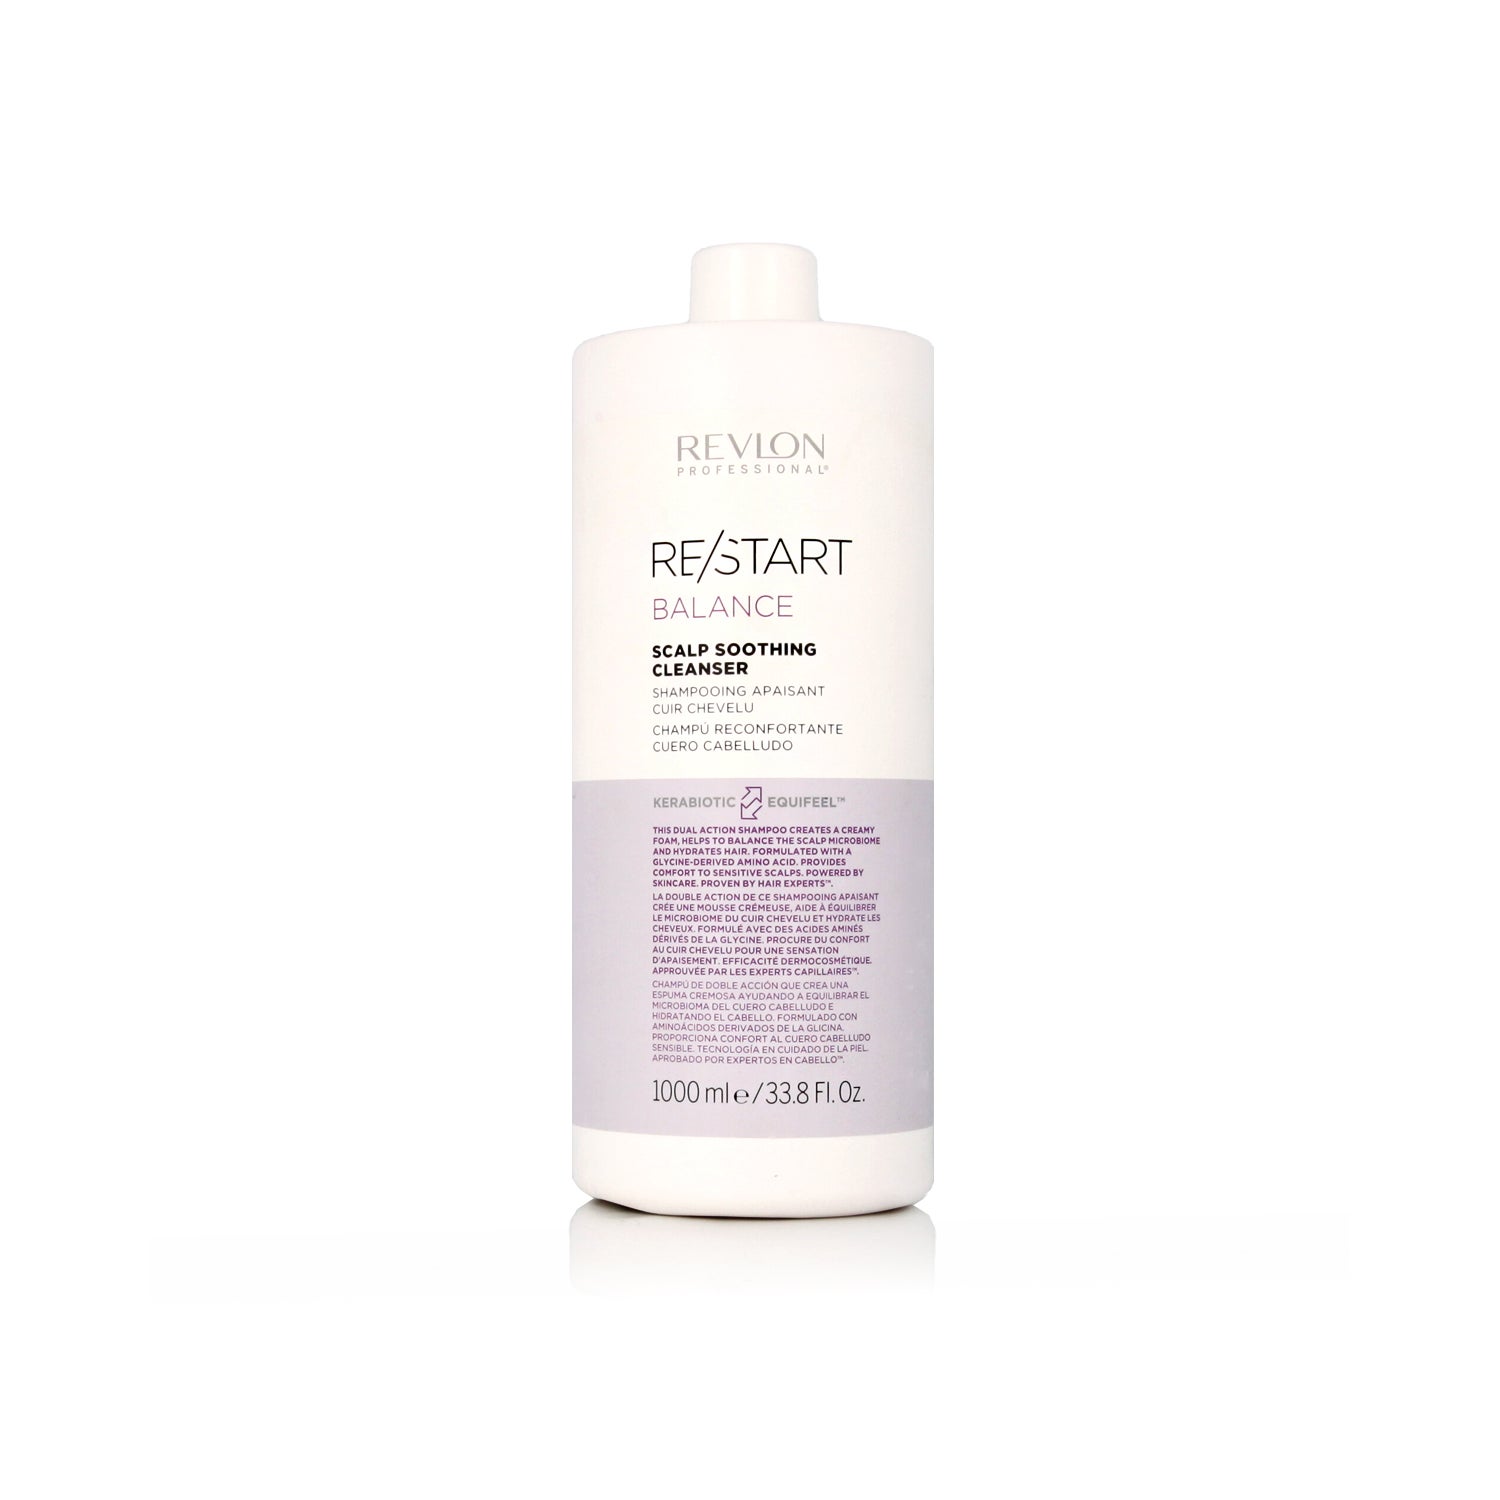 1000 ml PromoFarma Cleanser | Re-Start Shampoo Revlon Balance Soothing